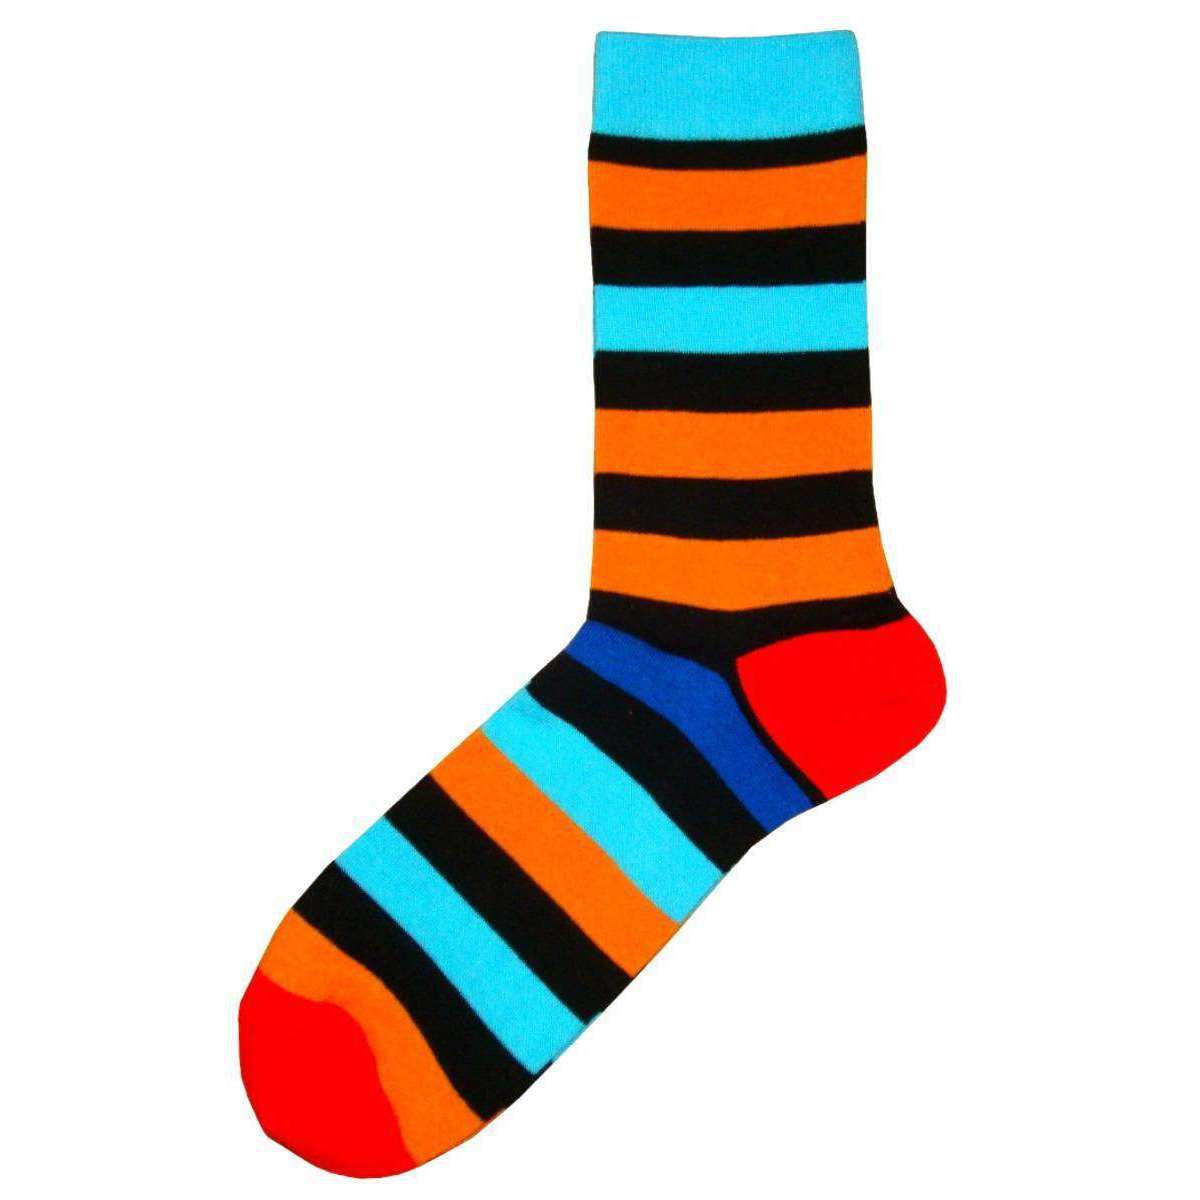 Bassin and Brown Multi Stripe Contrasting Heel and Toe Socks - Black/Blue/Orange